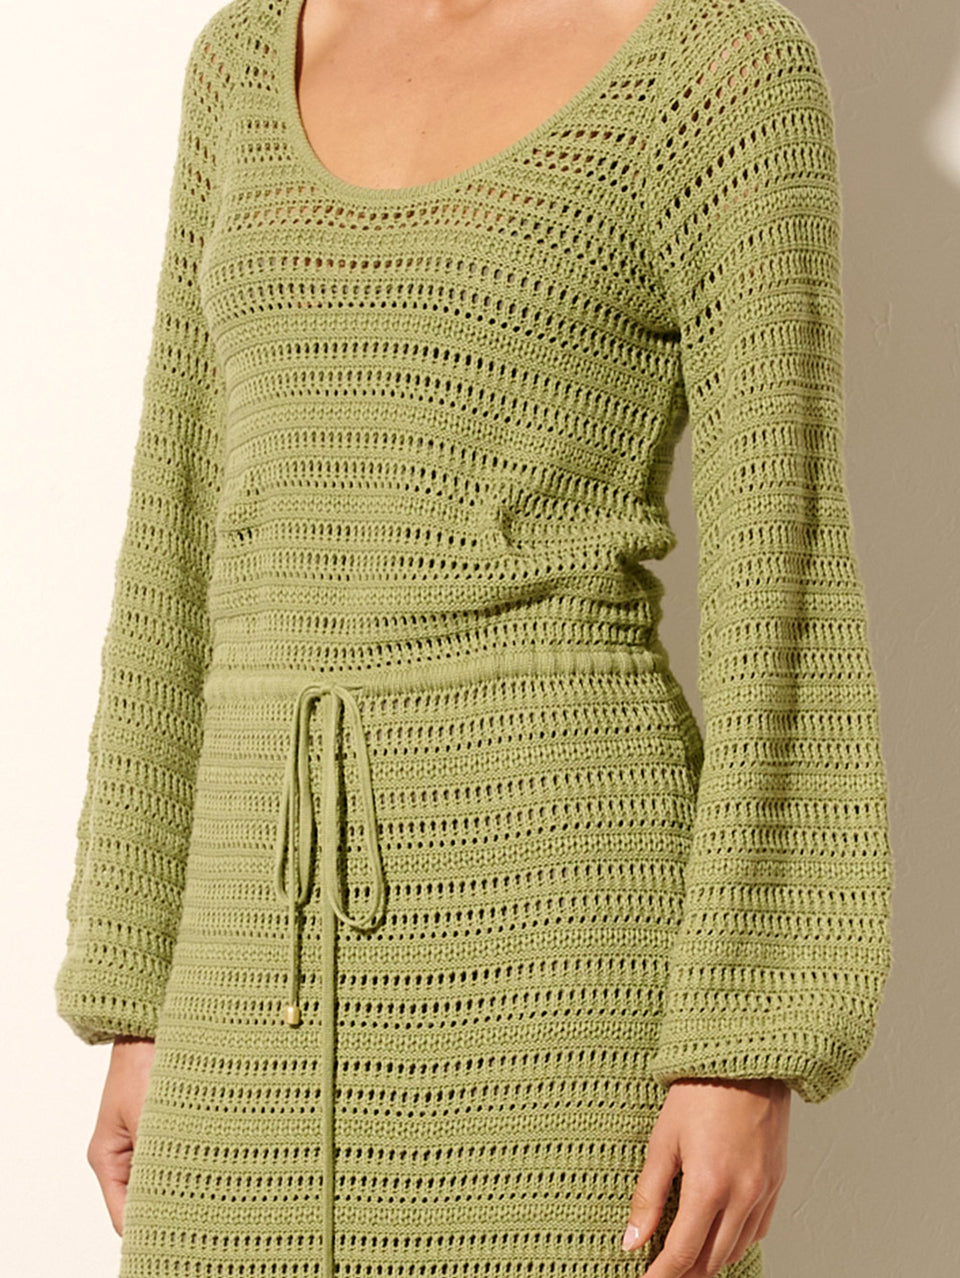 Pepe Knit Dress Avocado KIVARI | Model wears avocado green knit maxi dress close up